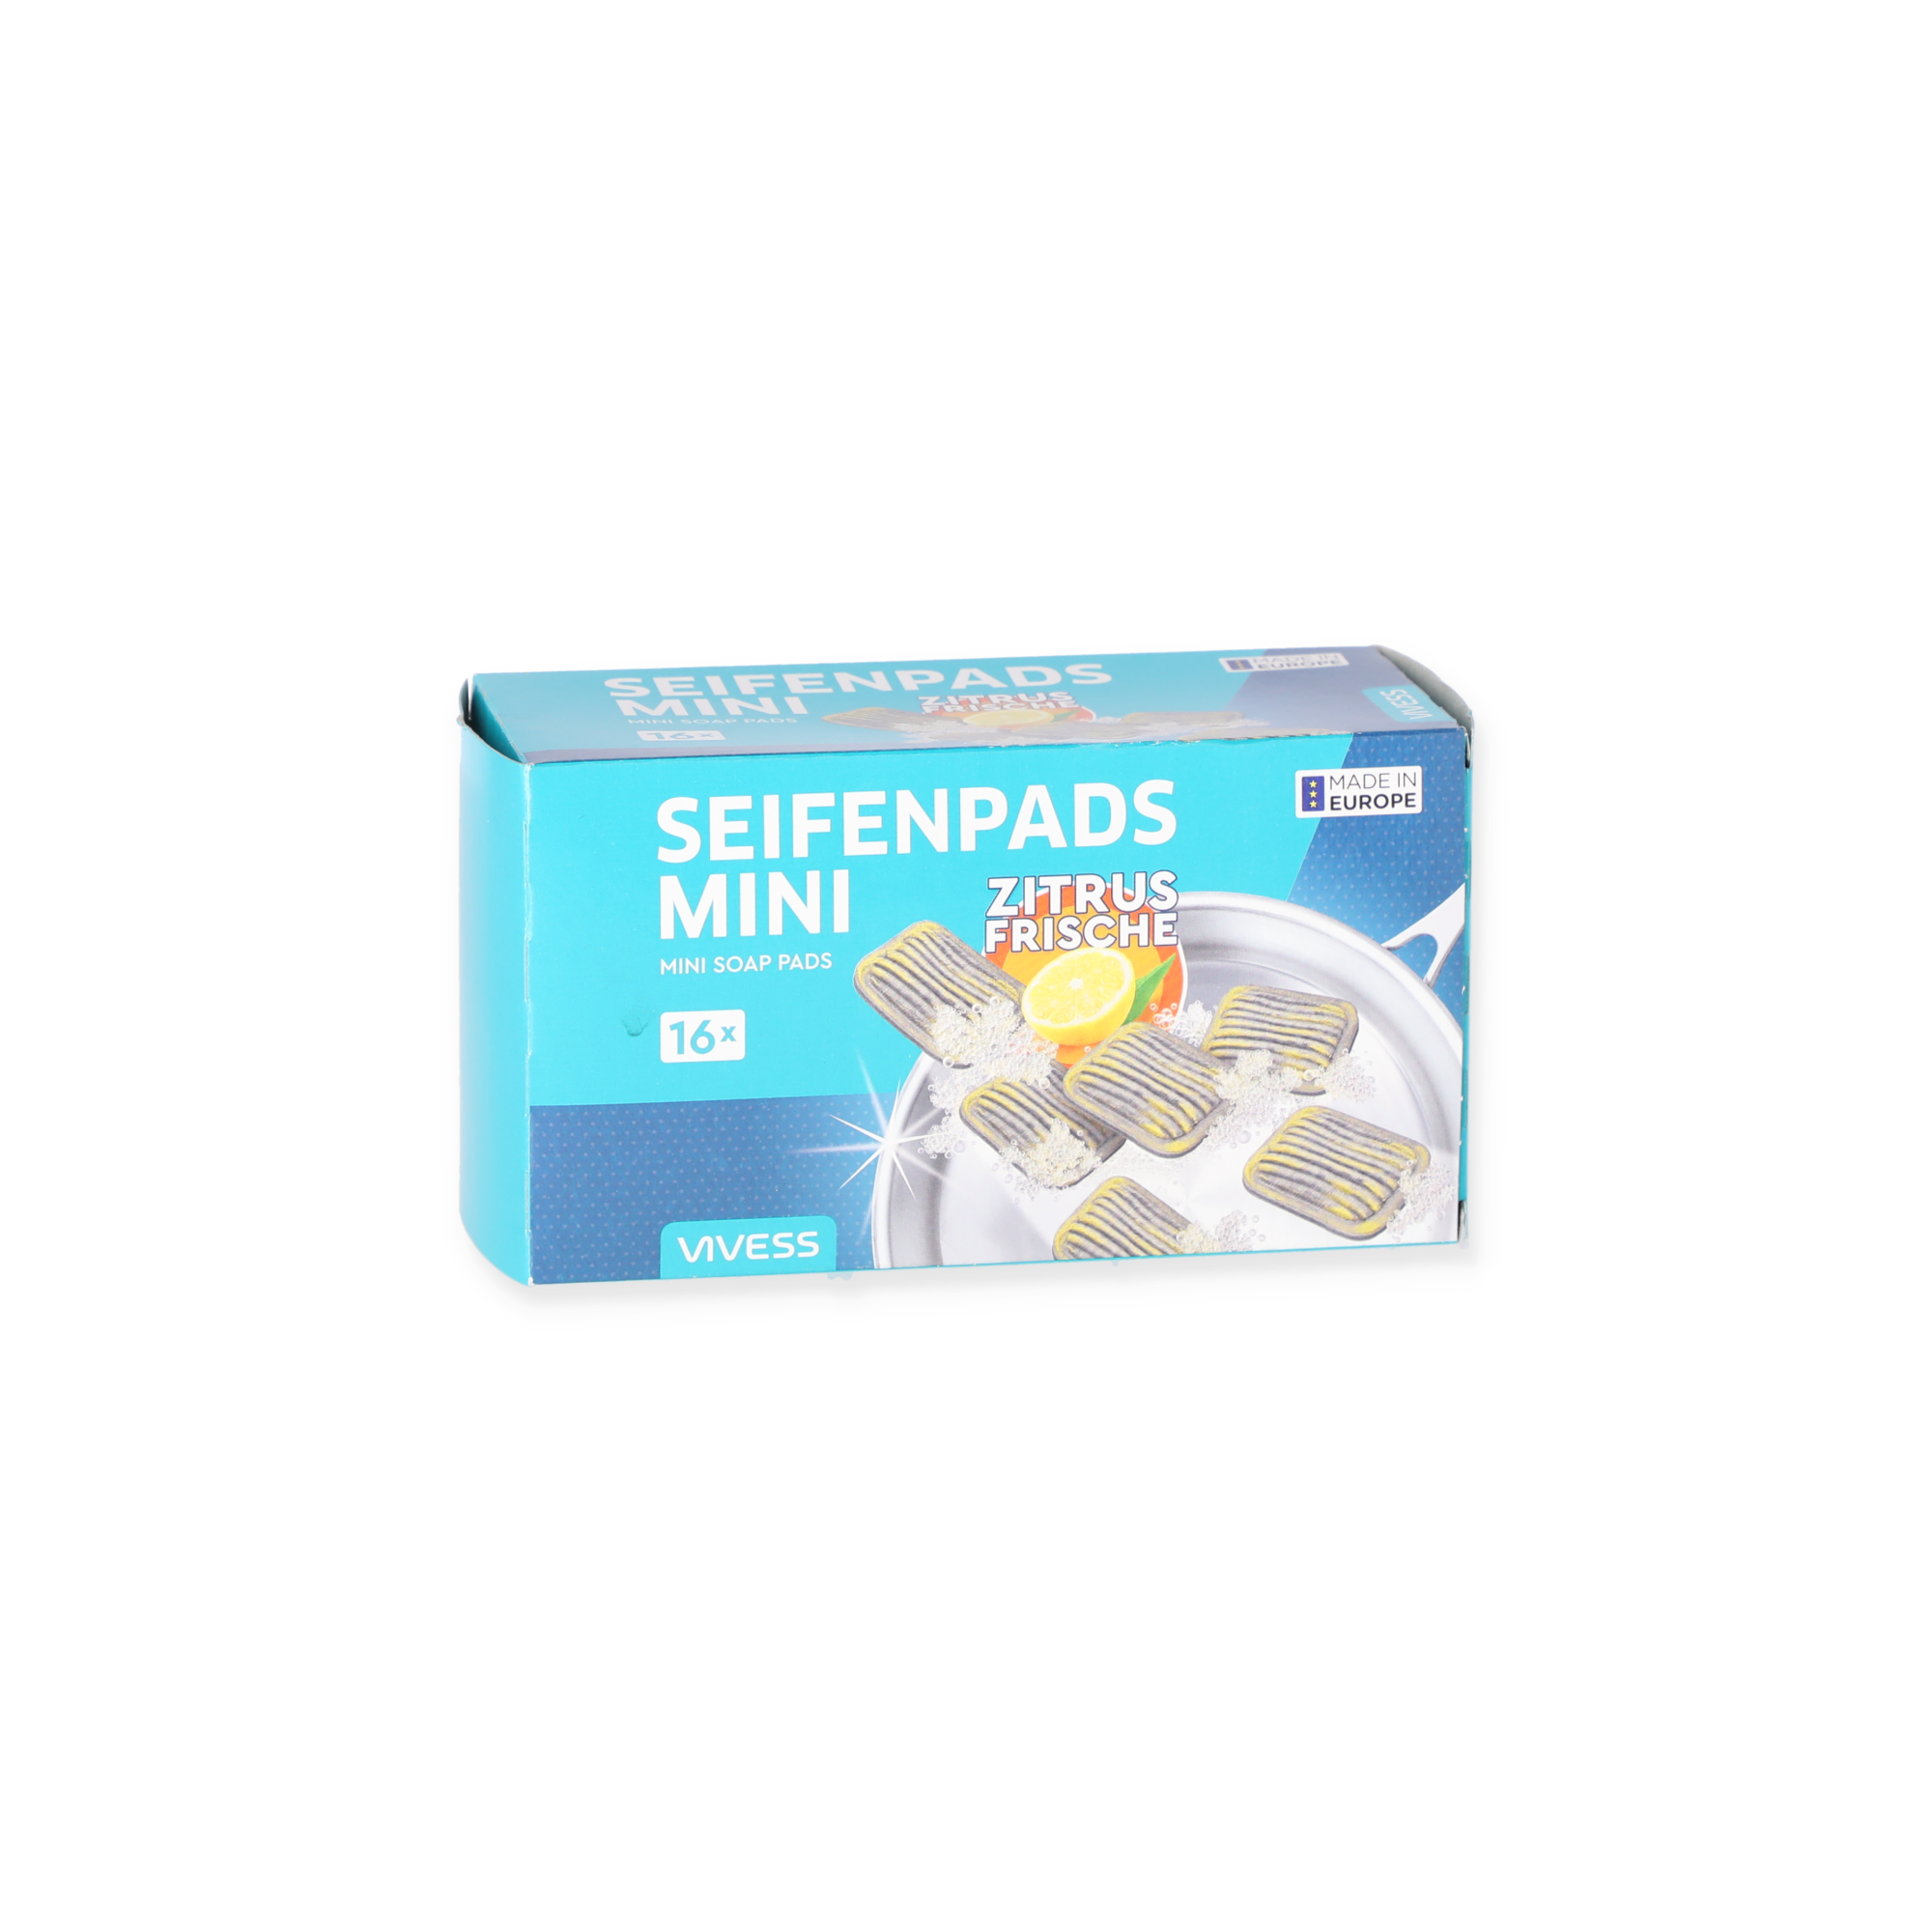 Mini-Seifenpads Zitrusfrische 16 Stück + product picture